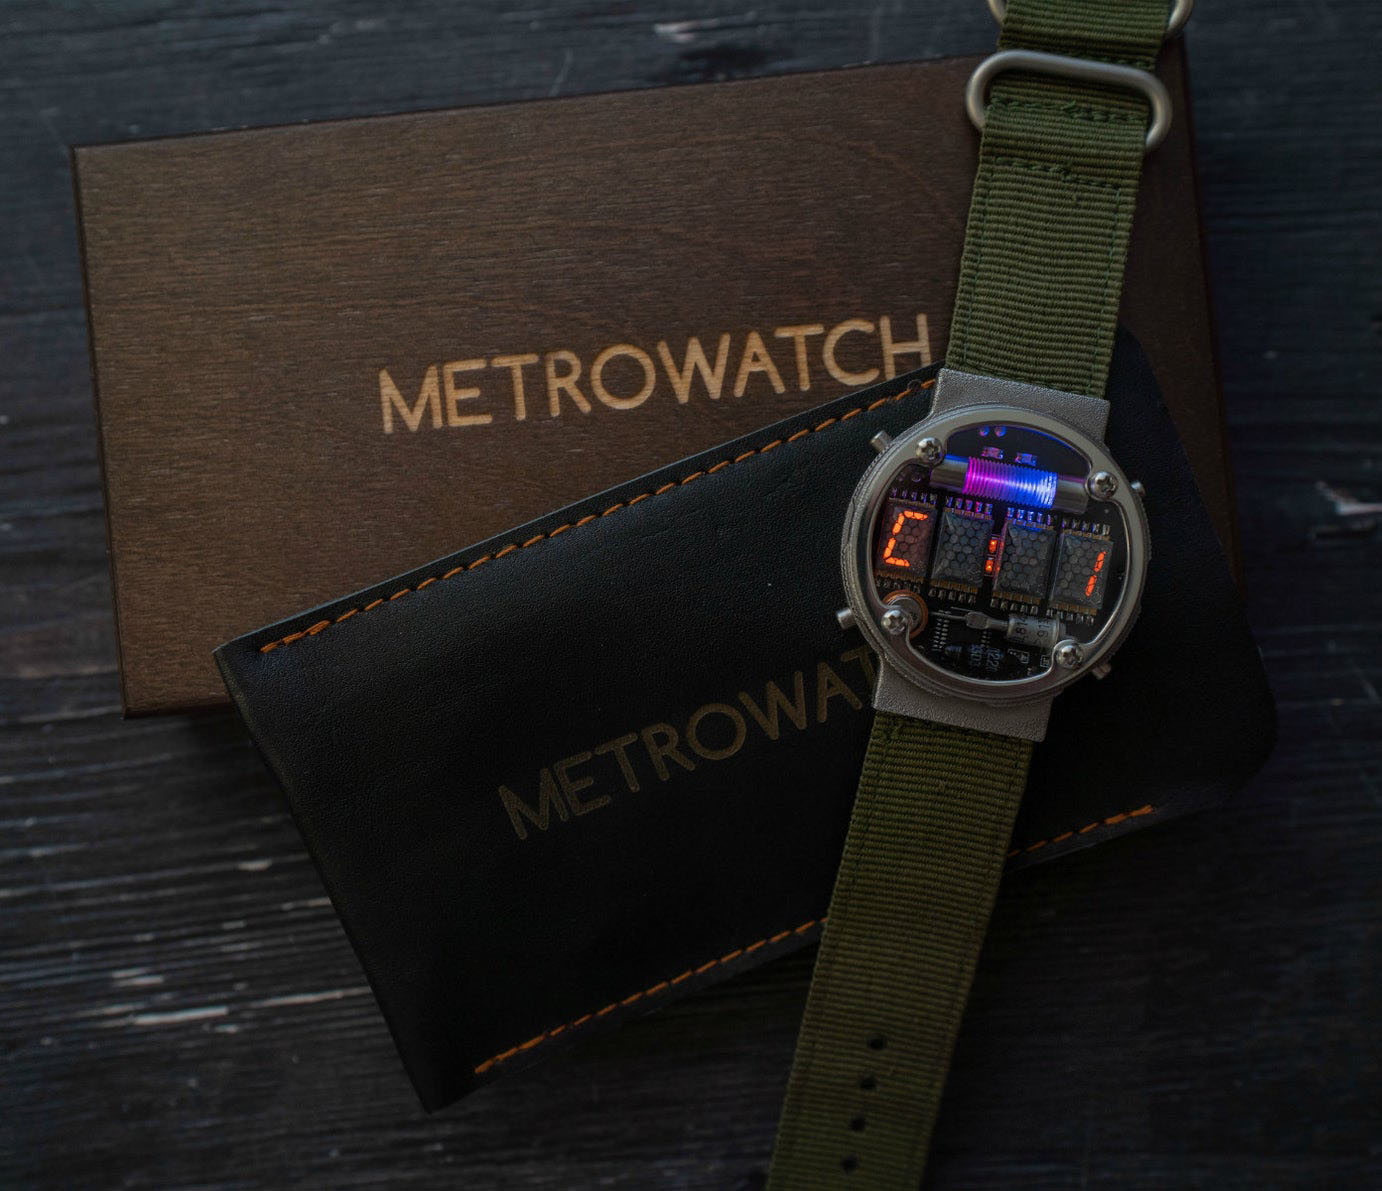 Metrowatch Artyom's Watch from Metro 2033 Video Game